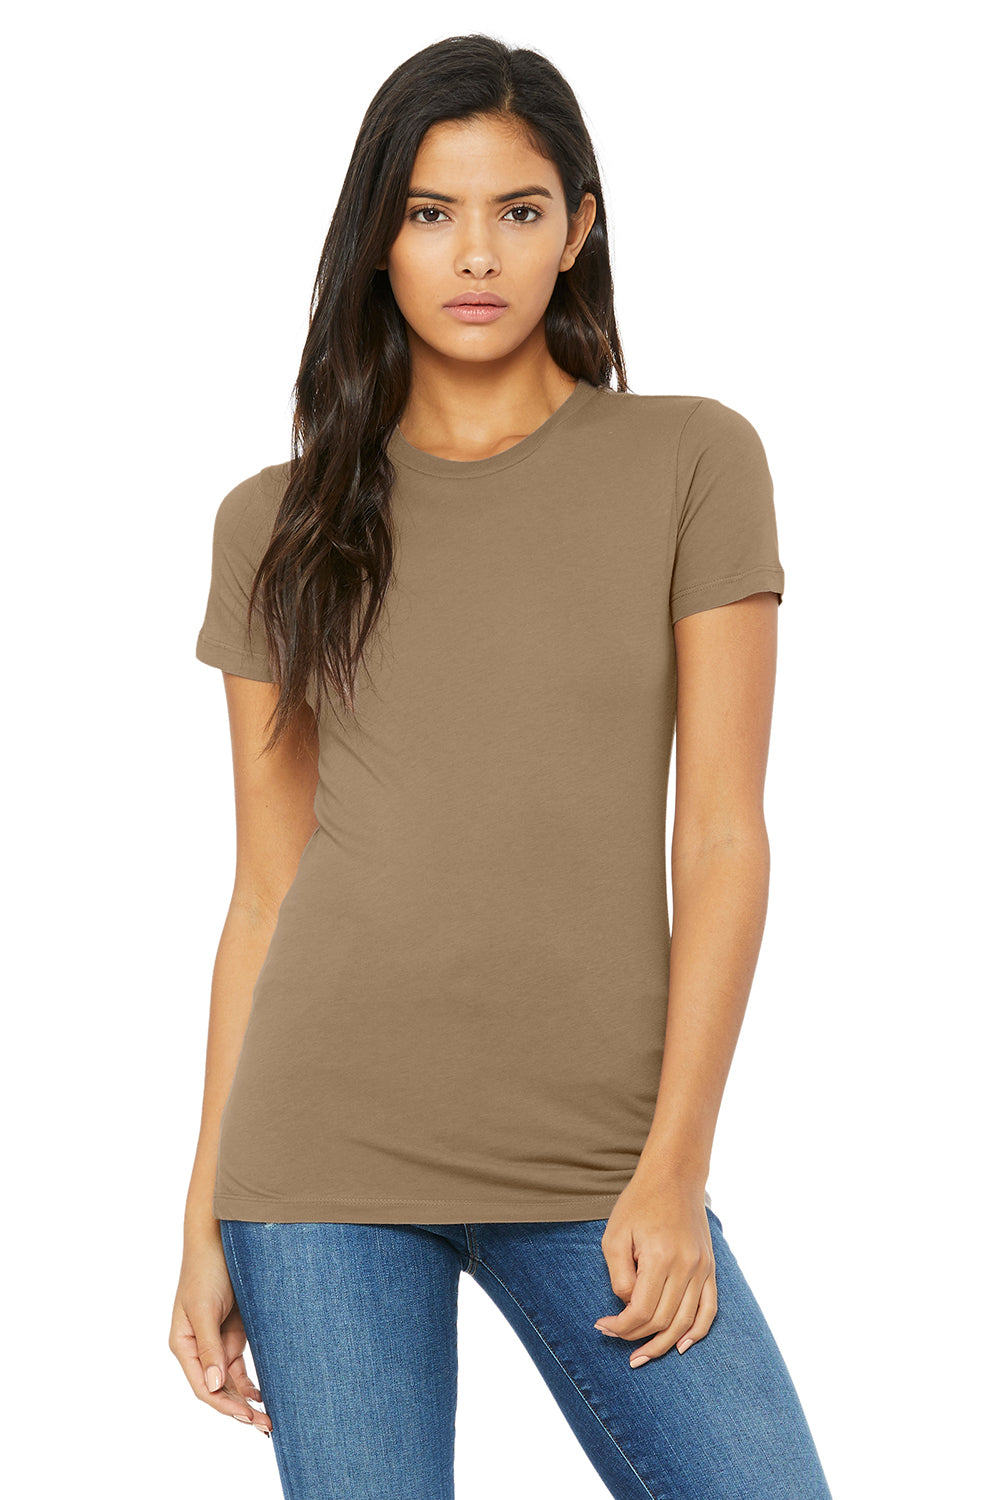 Bella + Canvas 6004 Womens The Favorite Short Sleeve Crewneck T-Shirt Pebble Brown Front